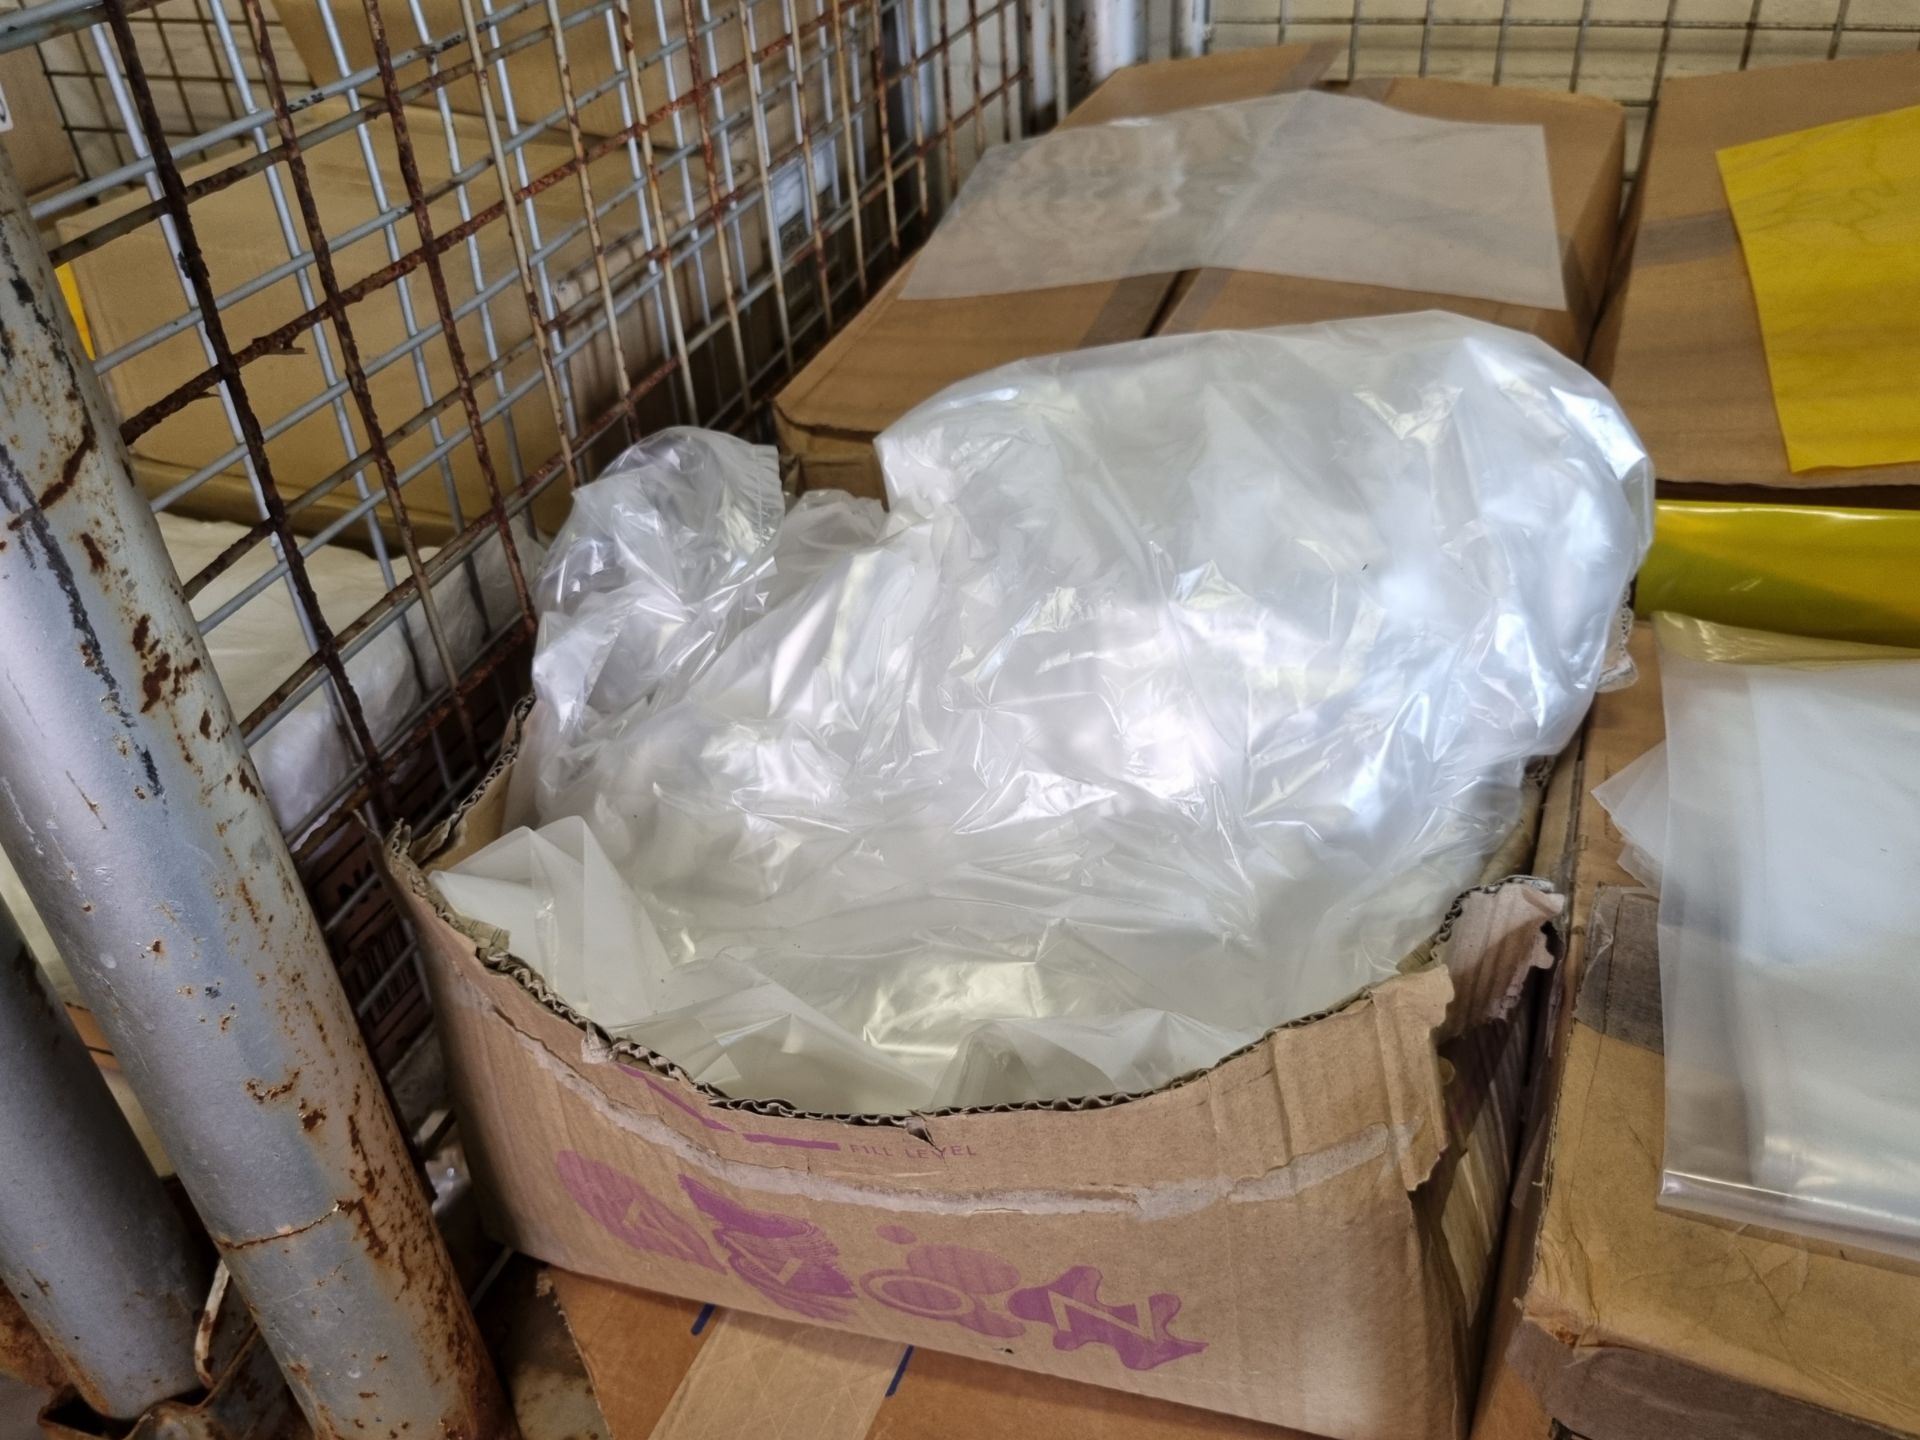 Swing bin liners, Food use clear polythene bags - Image 4 of 7